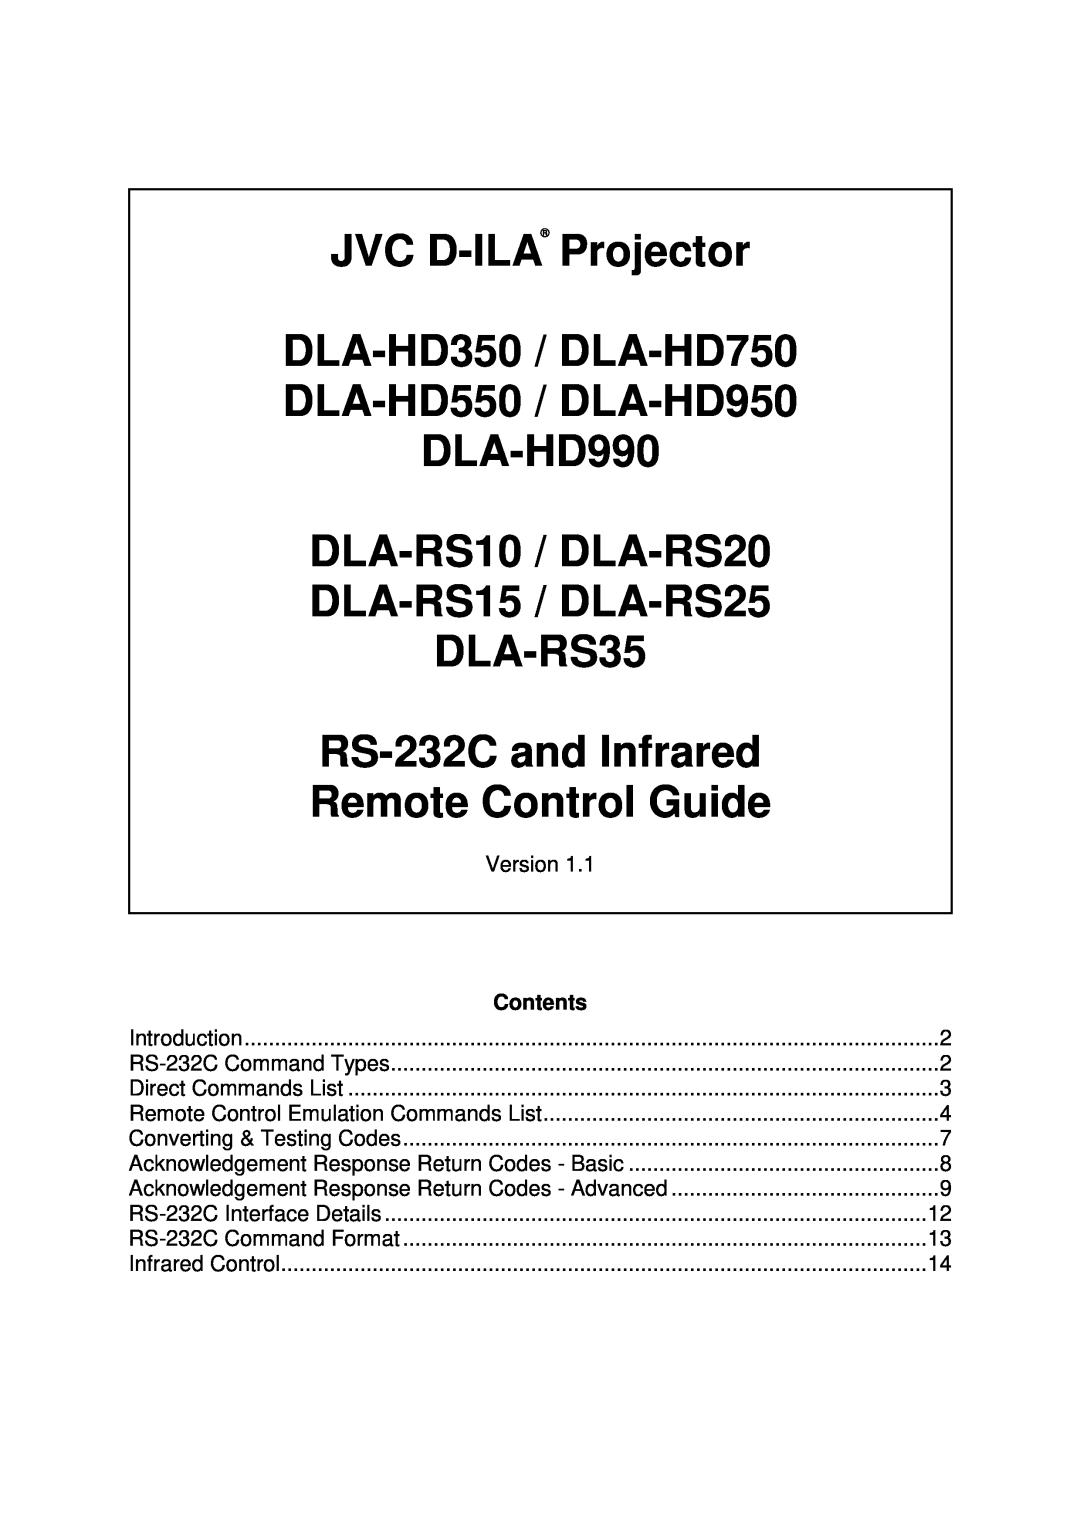 JVC DLA-HD350 manual Instructions, D-Ila Projector, Projecteur D-Ila, Proyector D-Ila, English Français Español/Castellano 